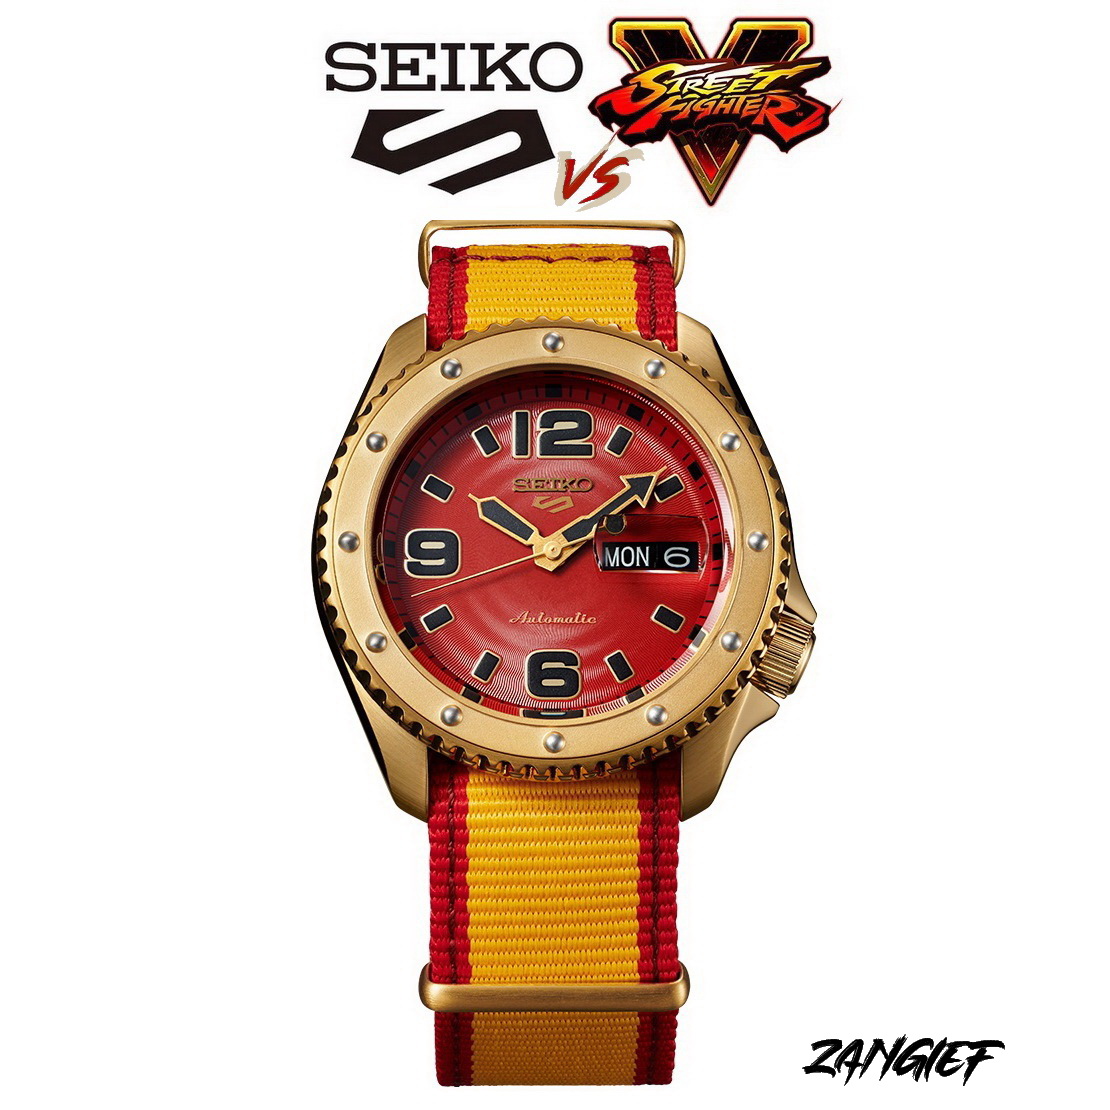 Seiko 5 Sports STREET FIGHTER V Limited Edition, RYU model